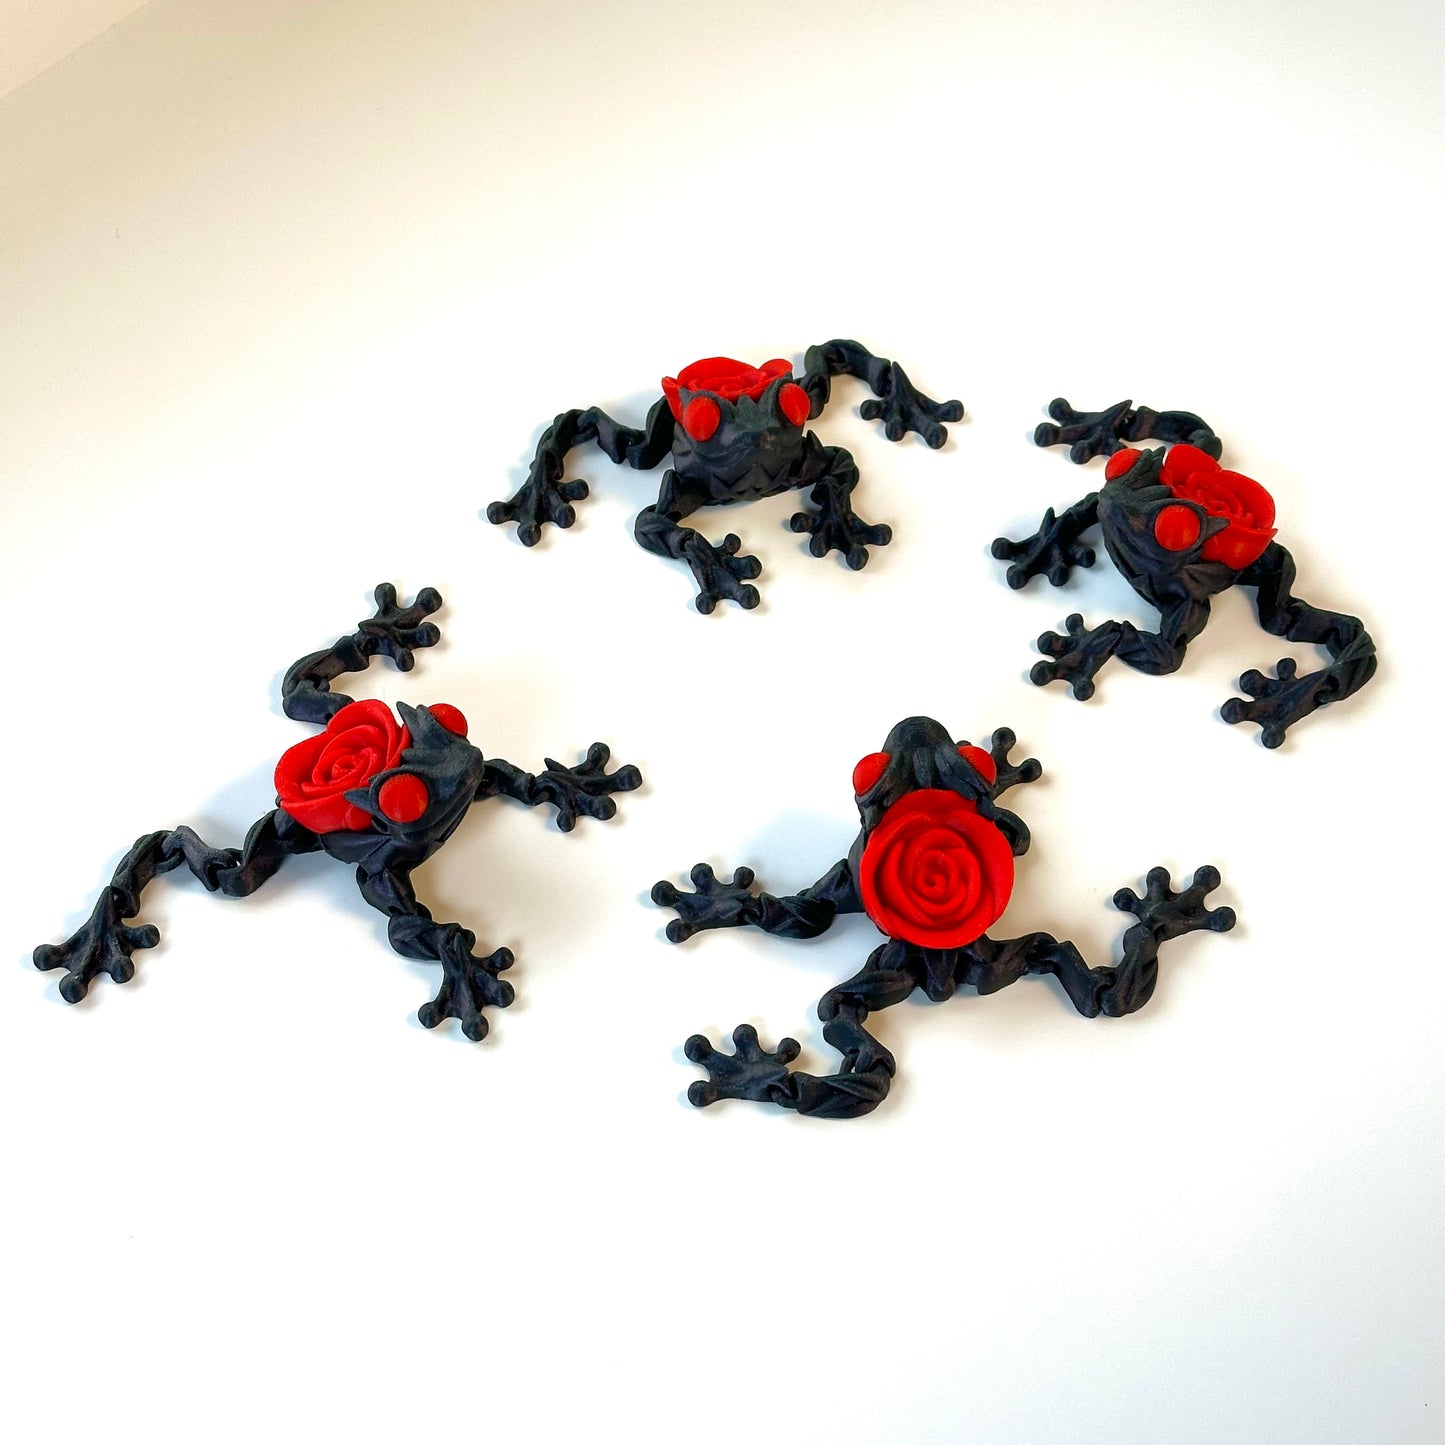 Rose Frog - Multi-Colored 3D Printed Articulating